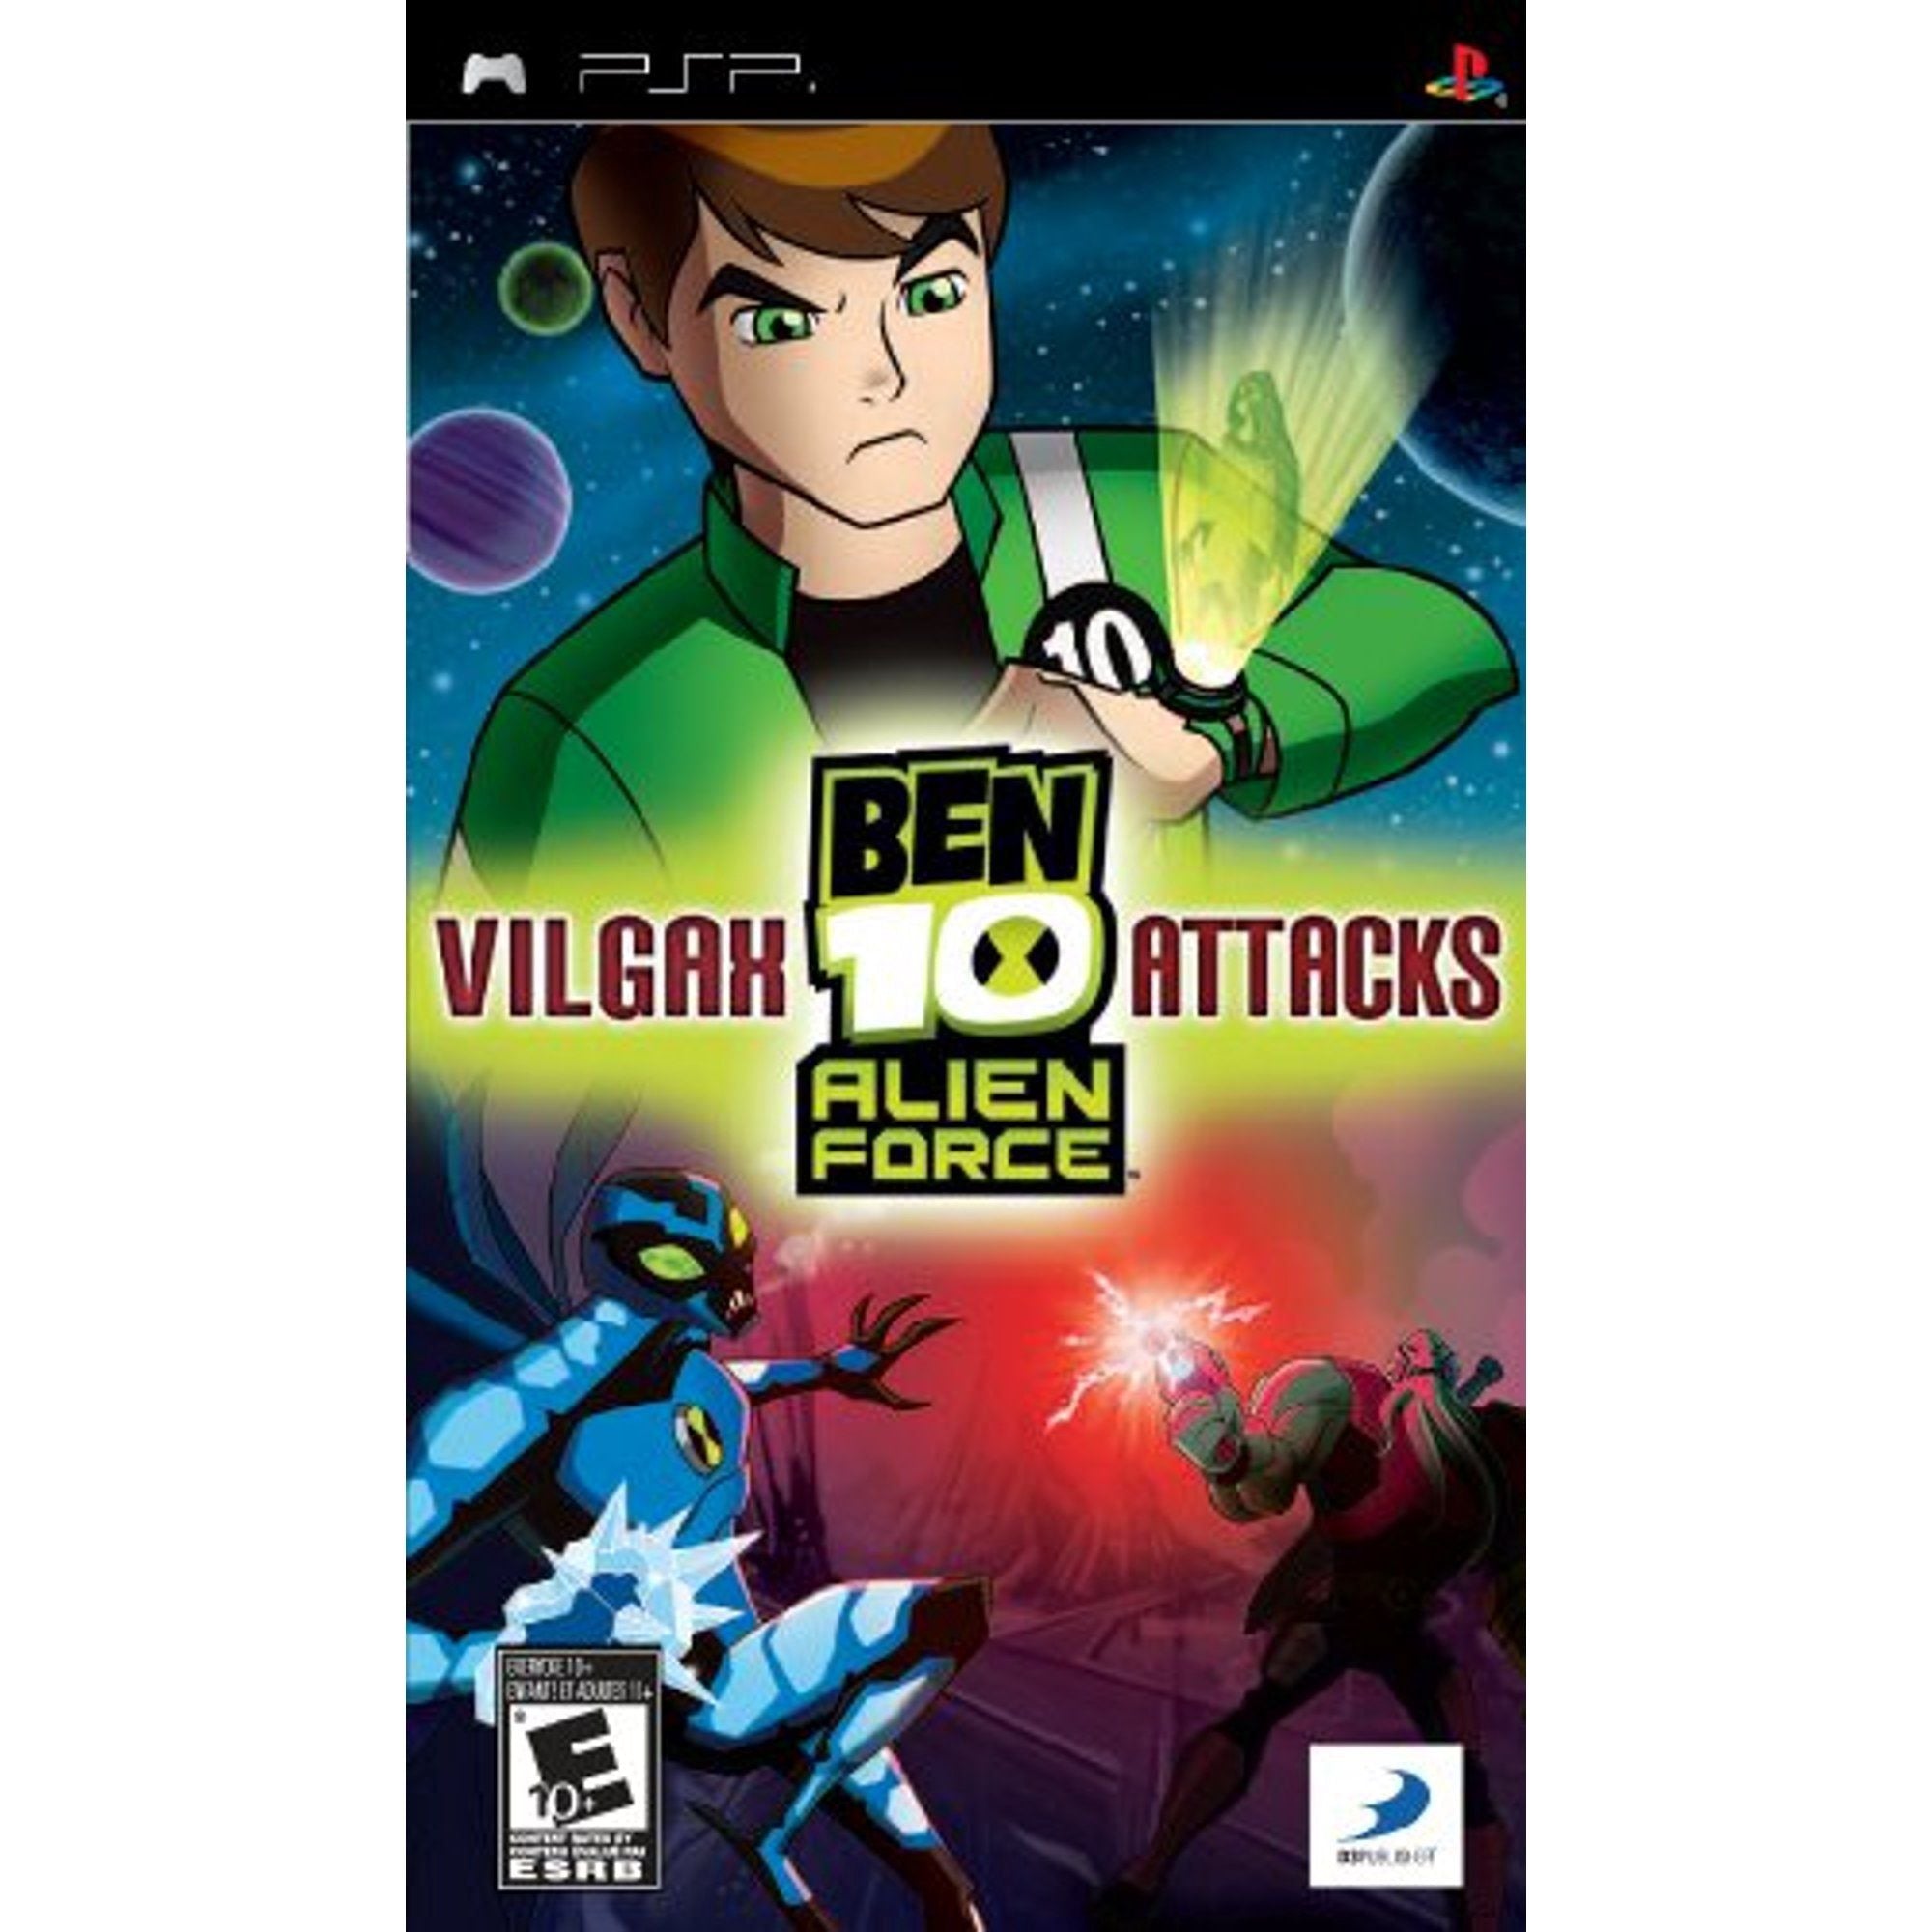 PSP - Ben 10 Alien Force Vilgax Attacks (In Case)